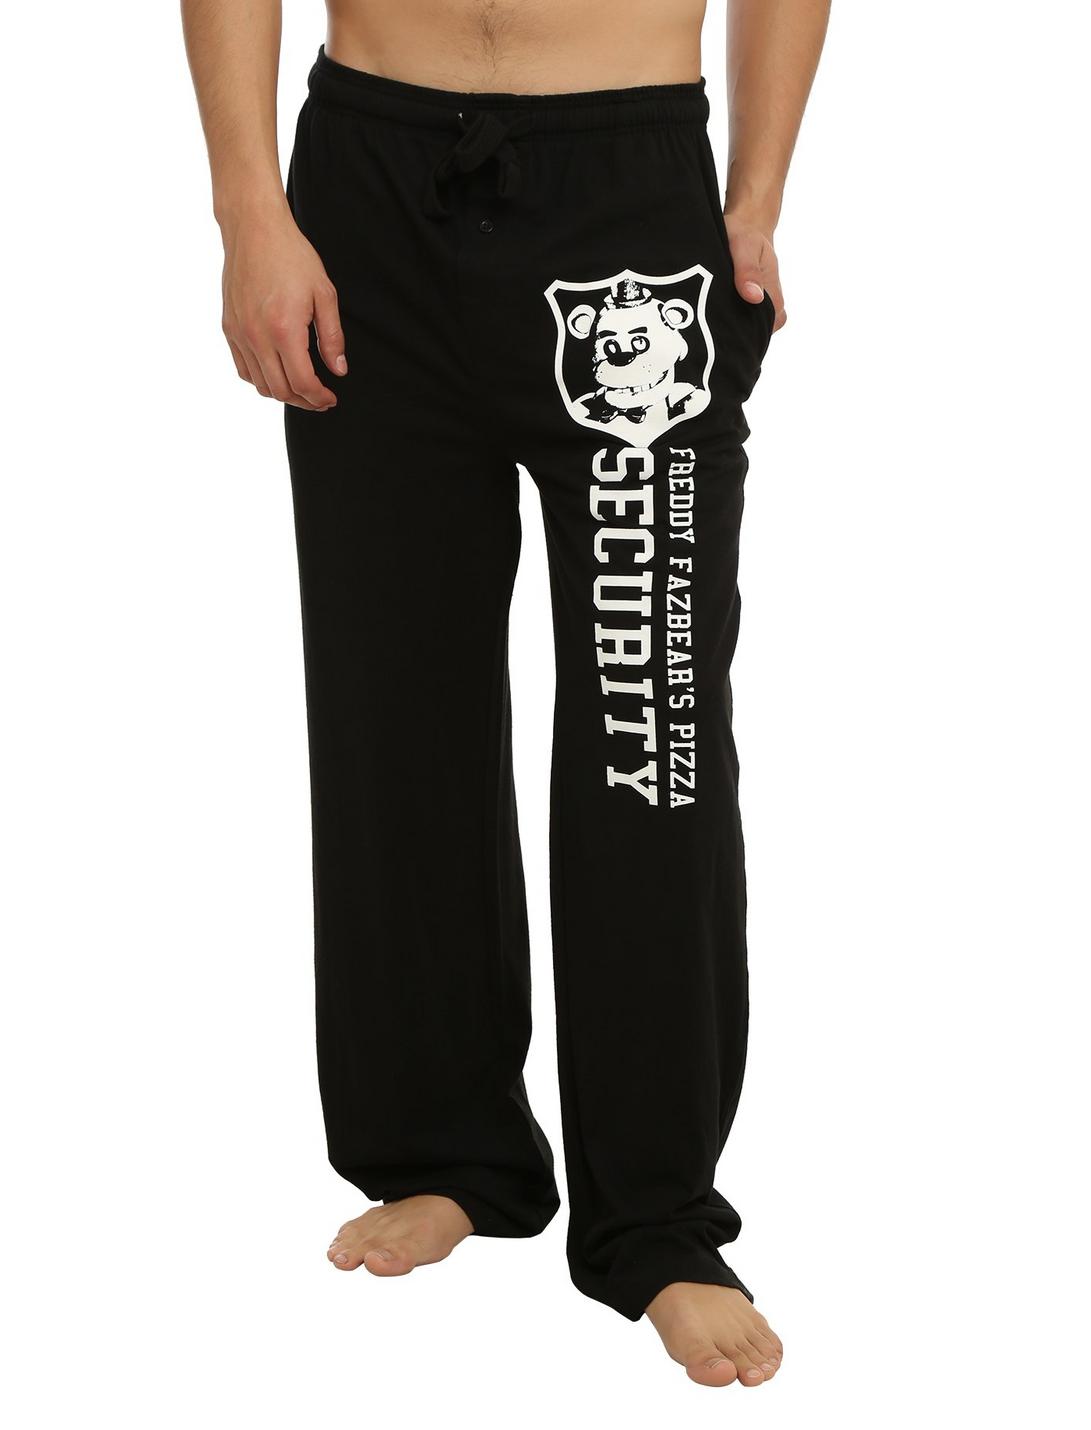 Five Nights At Freddy's Freddy Fazbear's Pizza Security Guys Pajama Pants, BLACK, hi-res